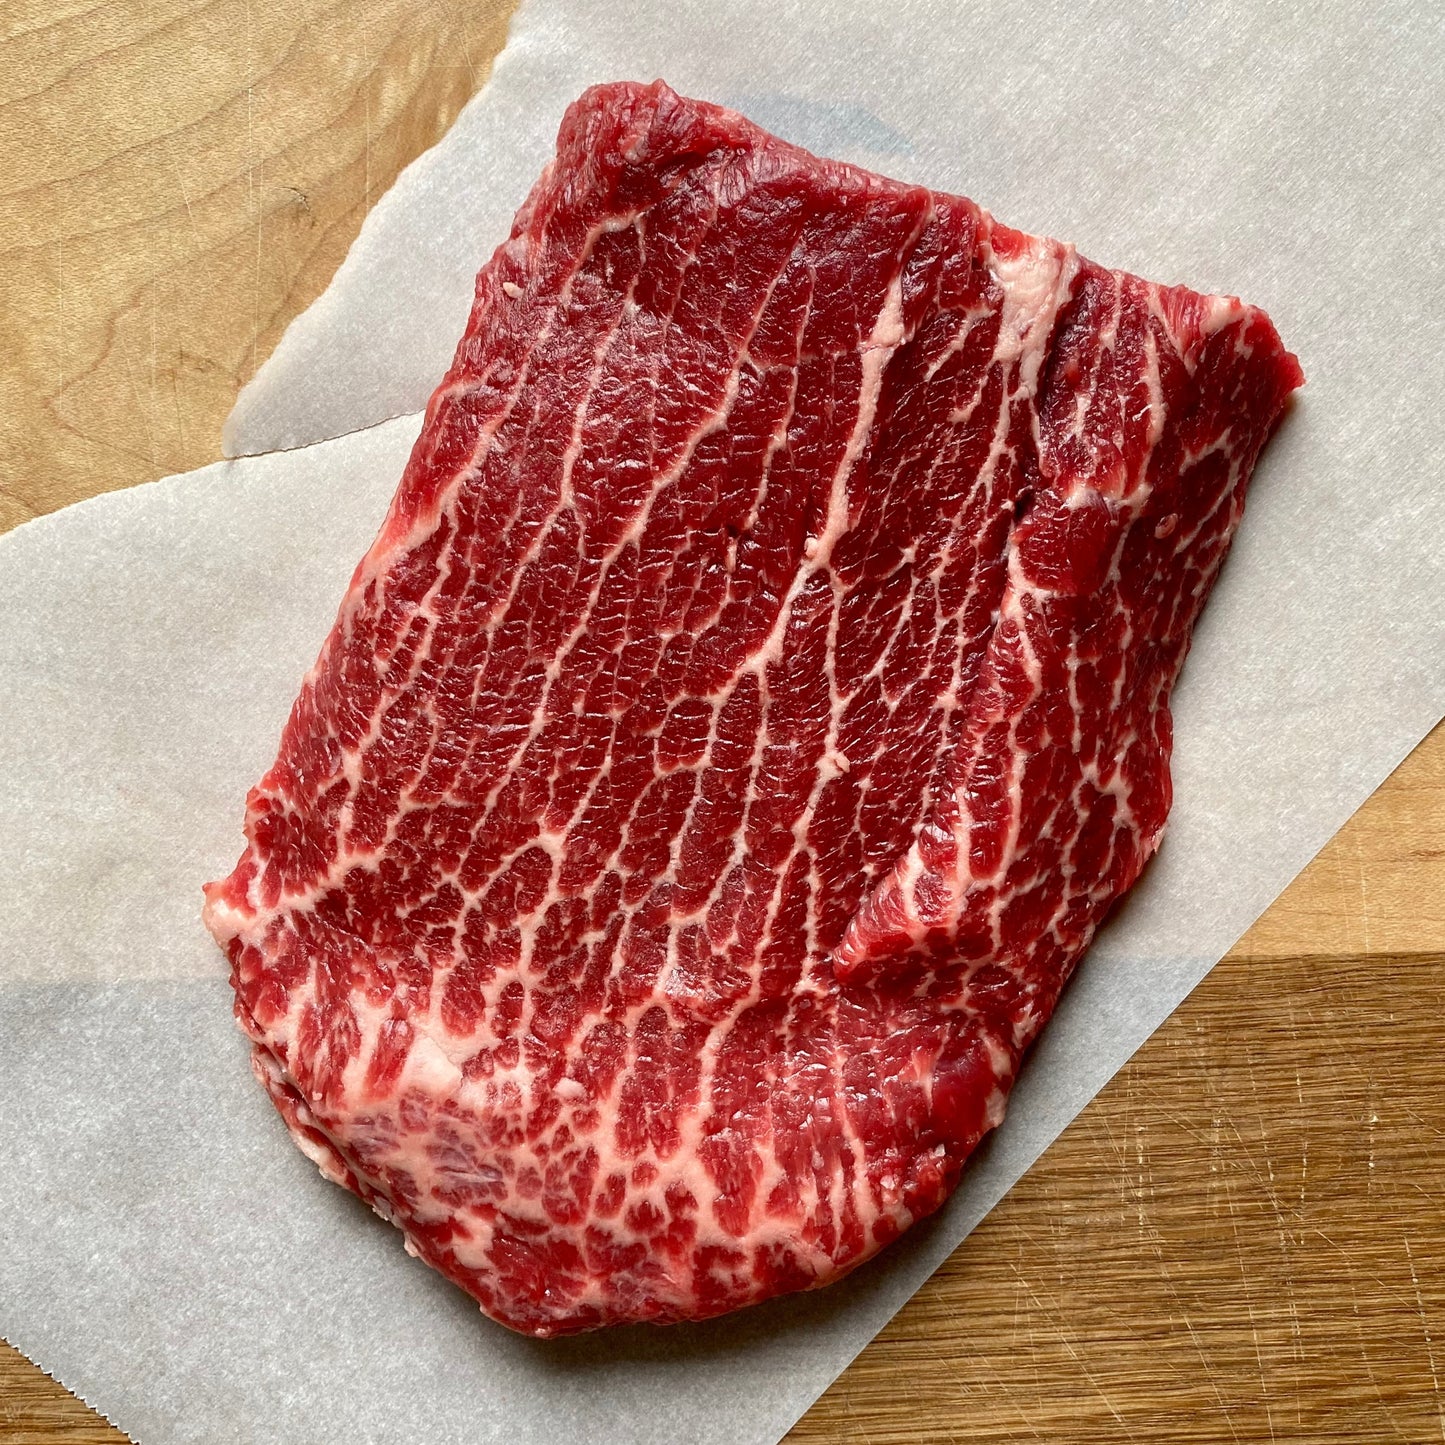 Flat Iron Steak - $12.99/lb